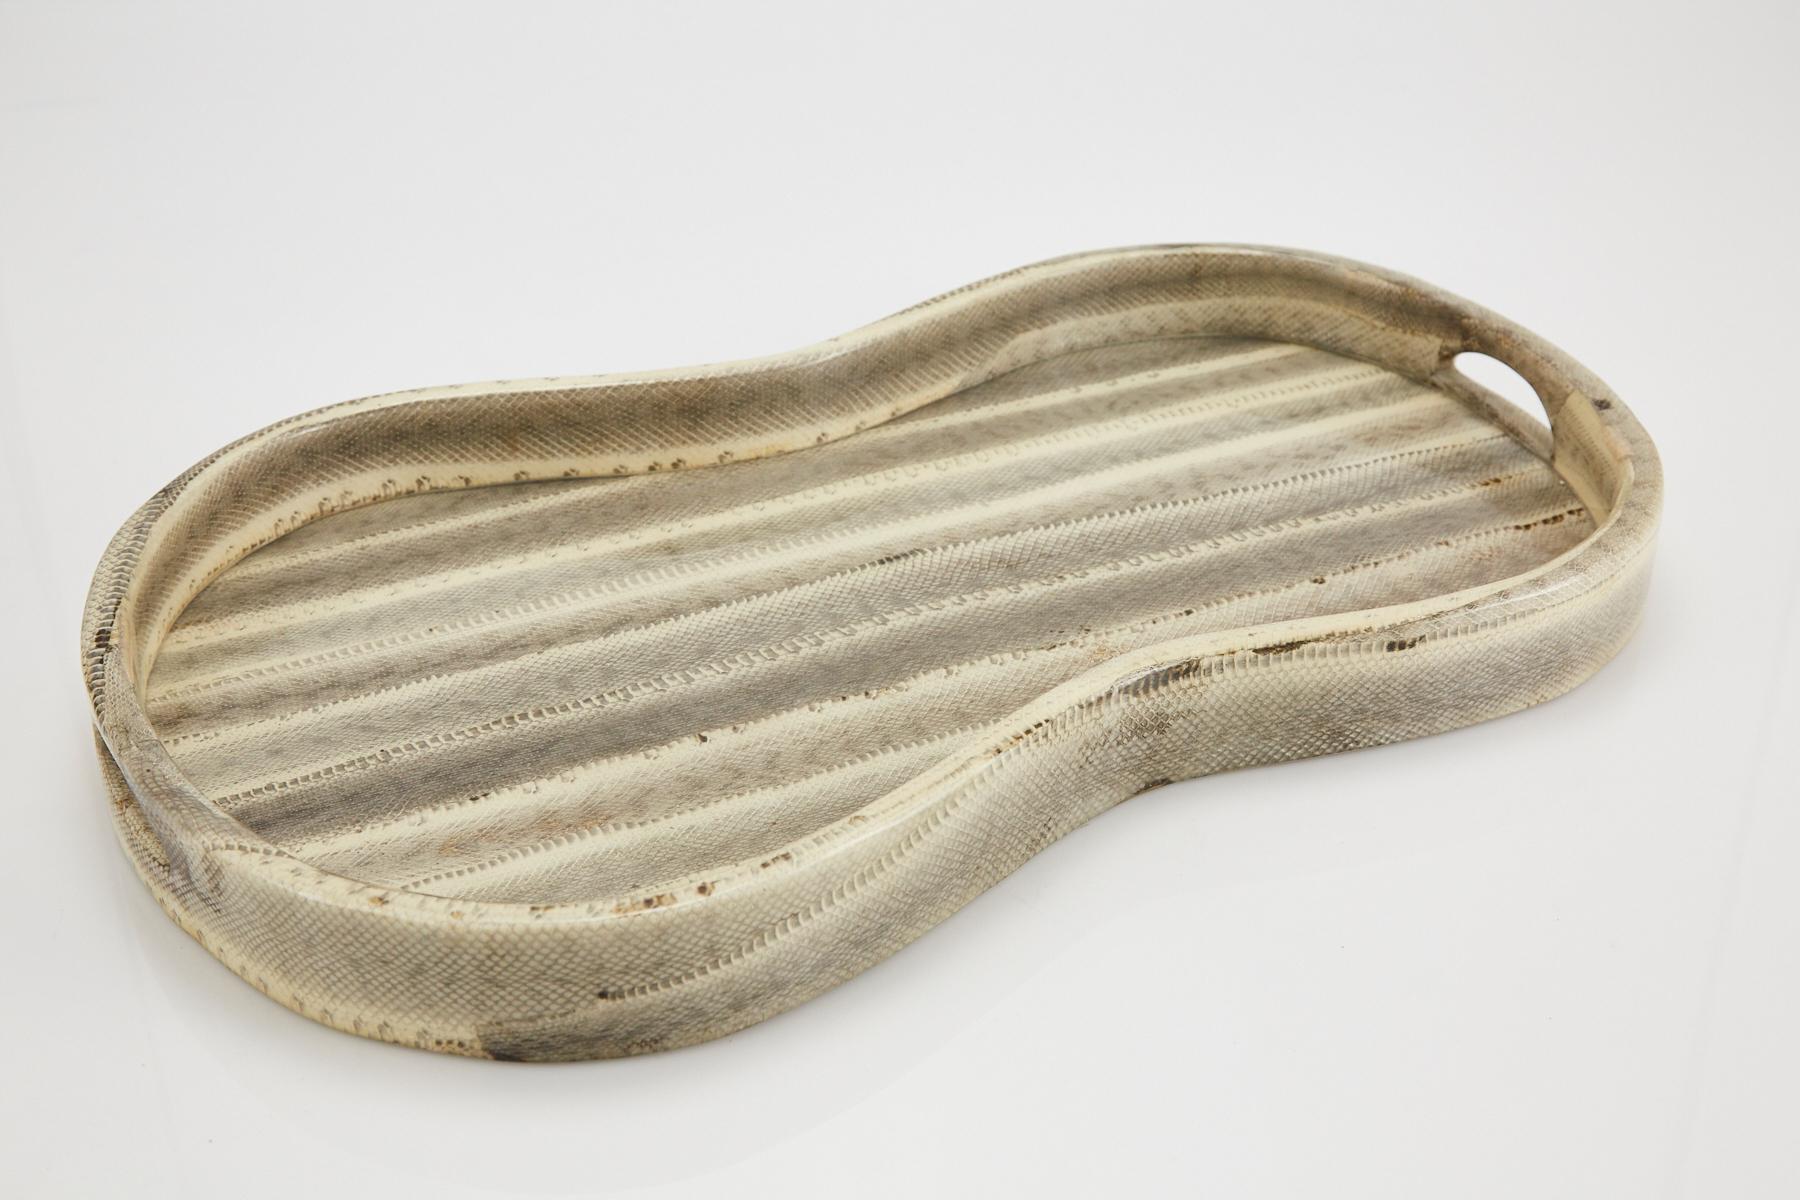 Minimalist Peanut Shaped Snakeskin Serving or Dresser Tray